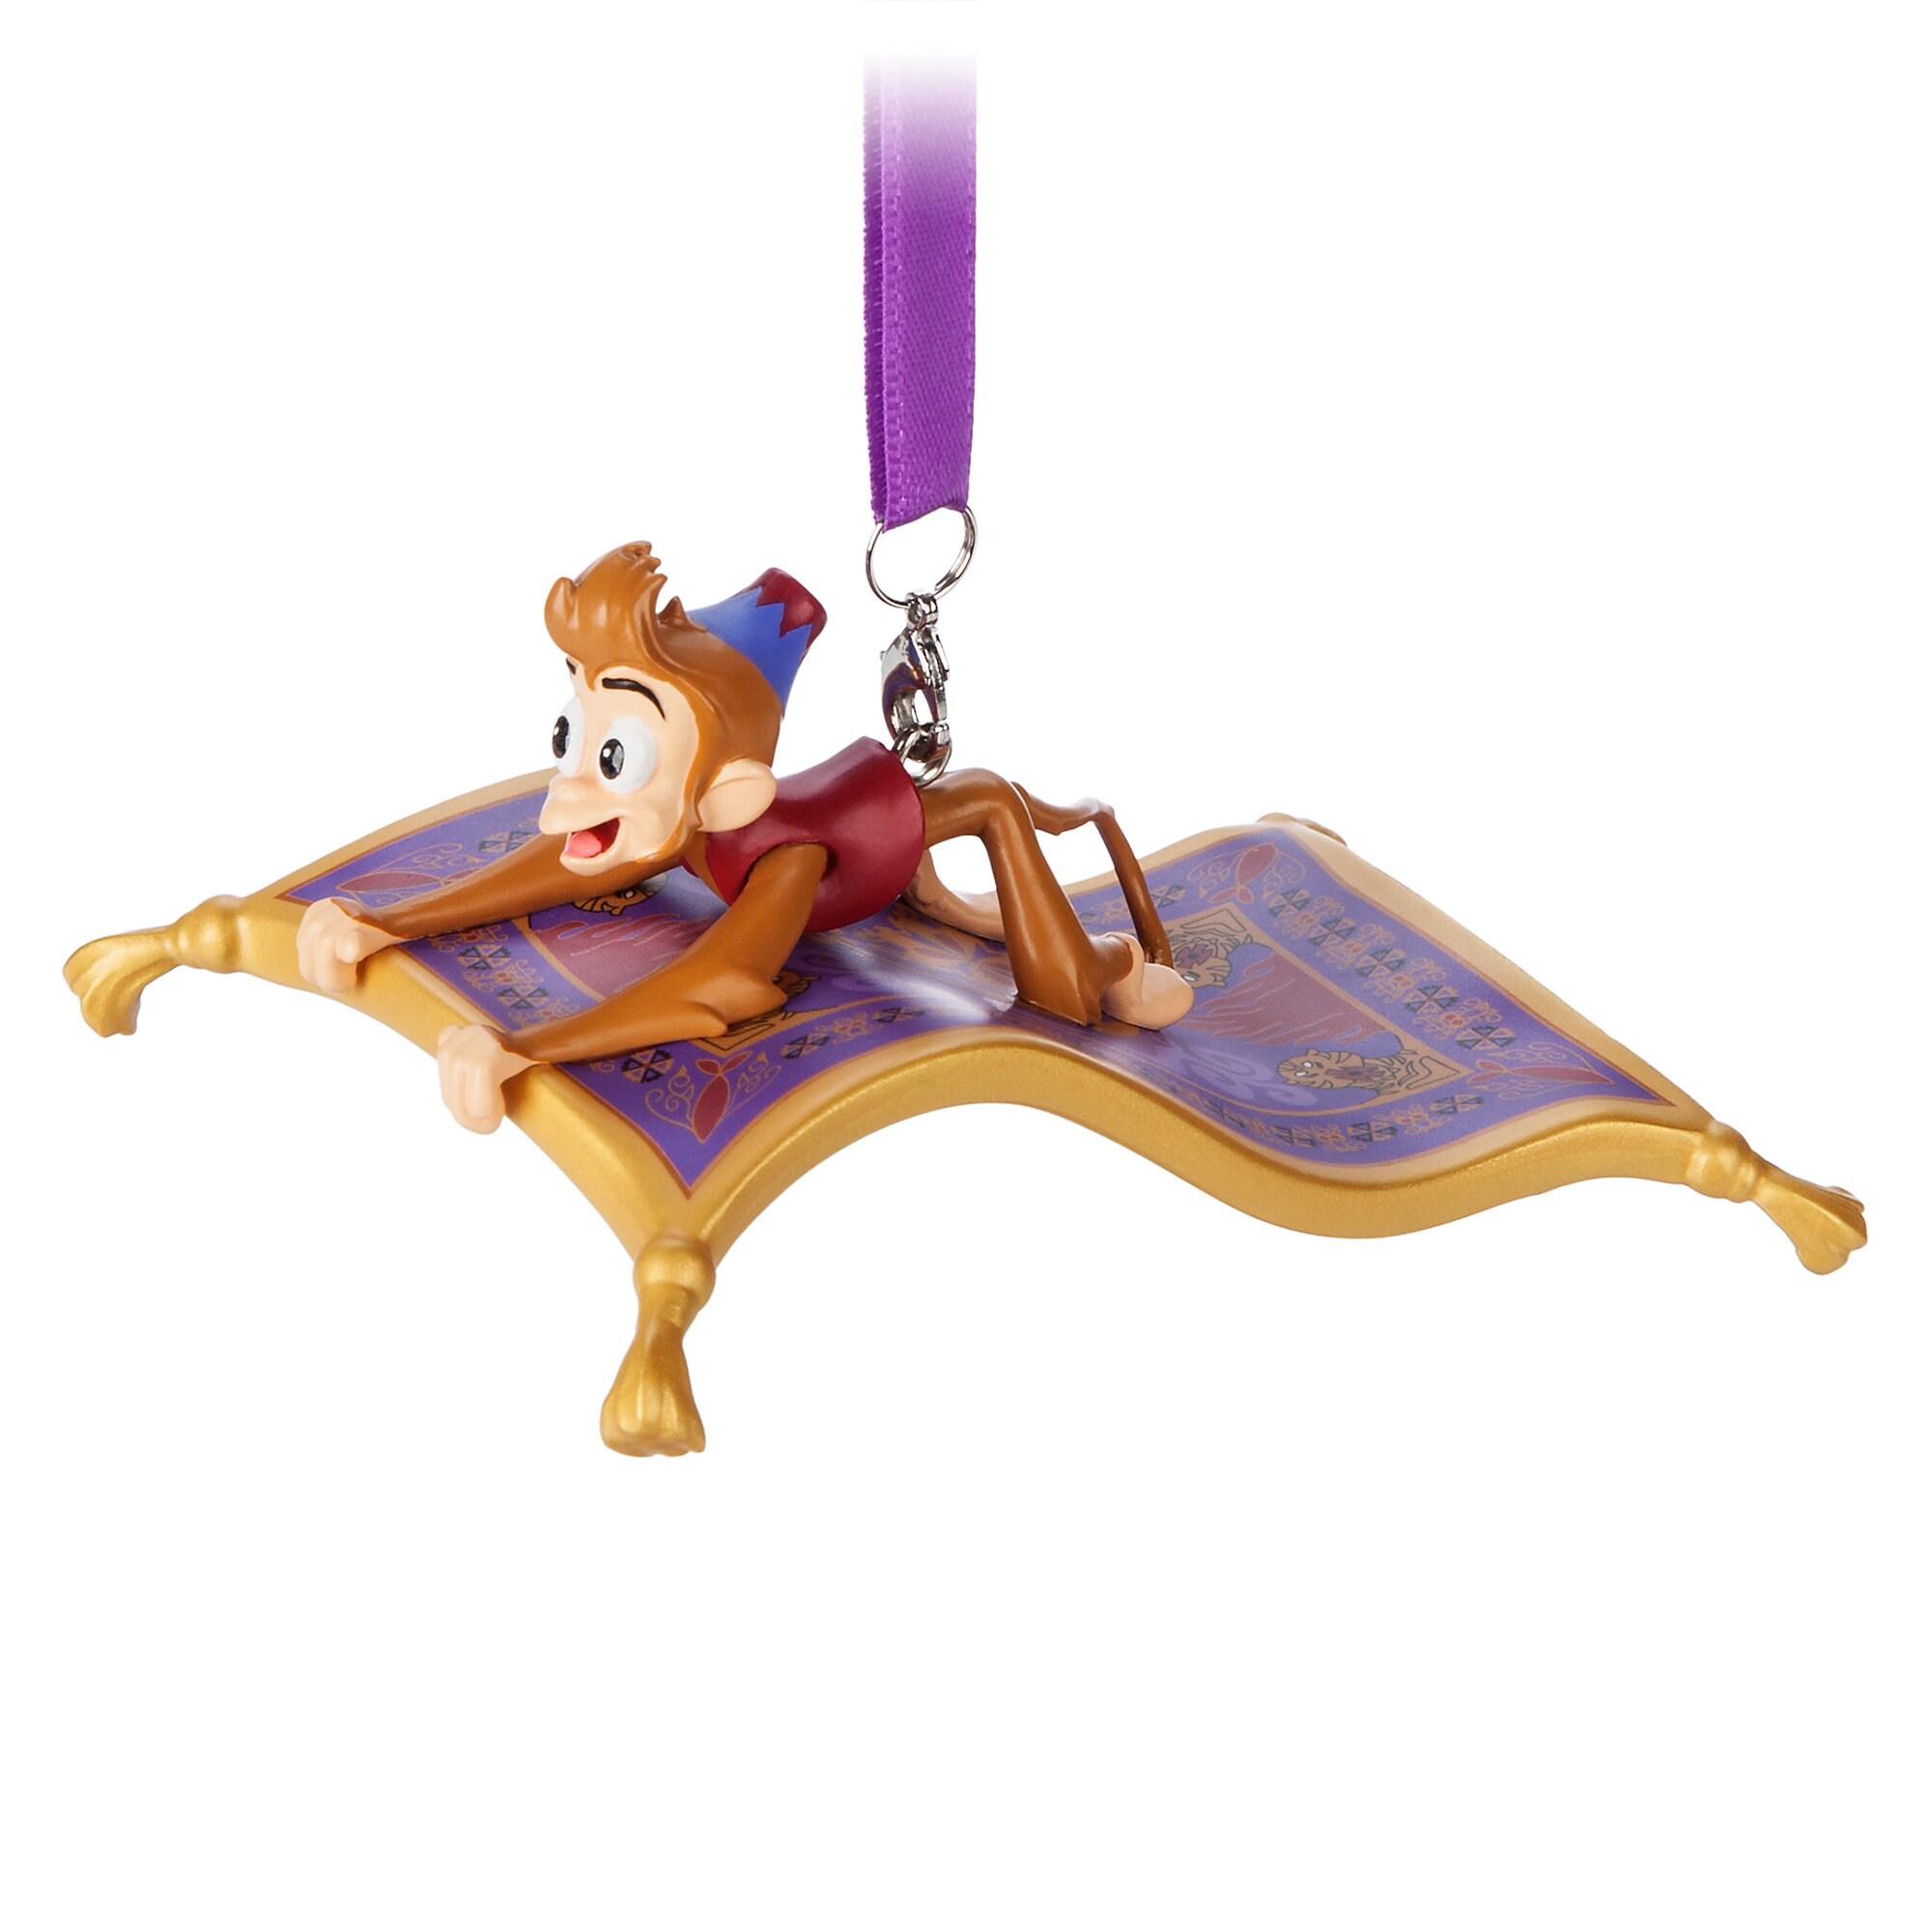 Abu and Magic Carpet Figural Ornament - Aladdin